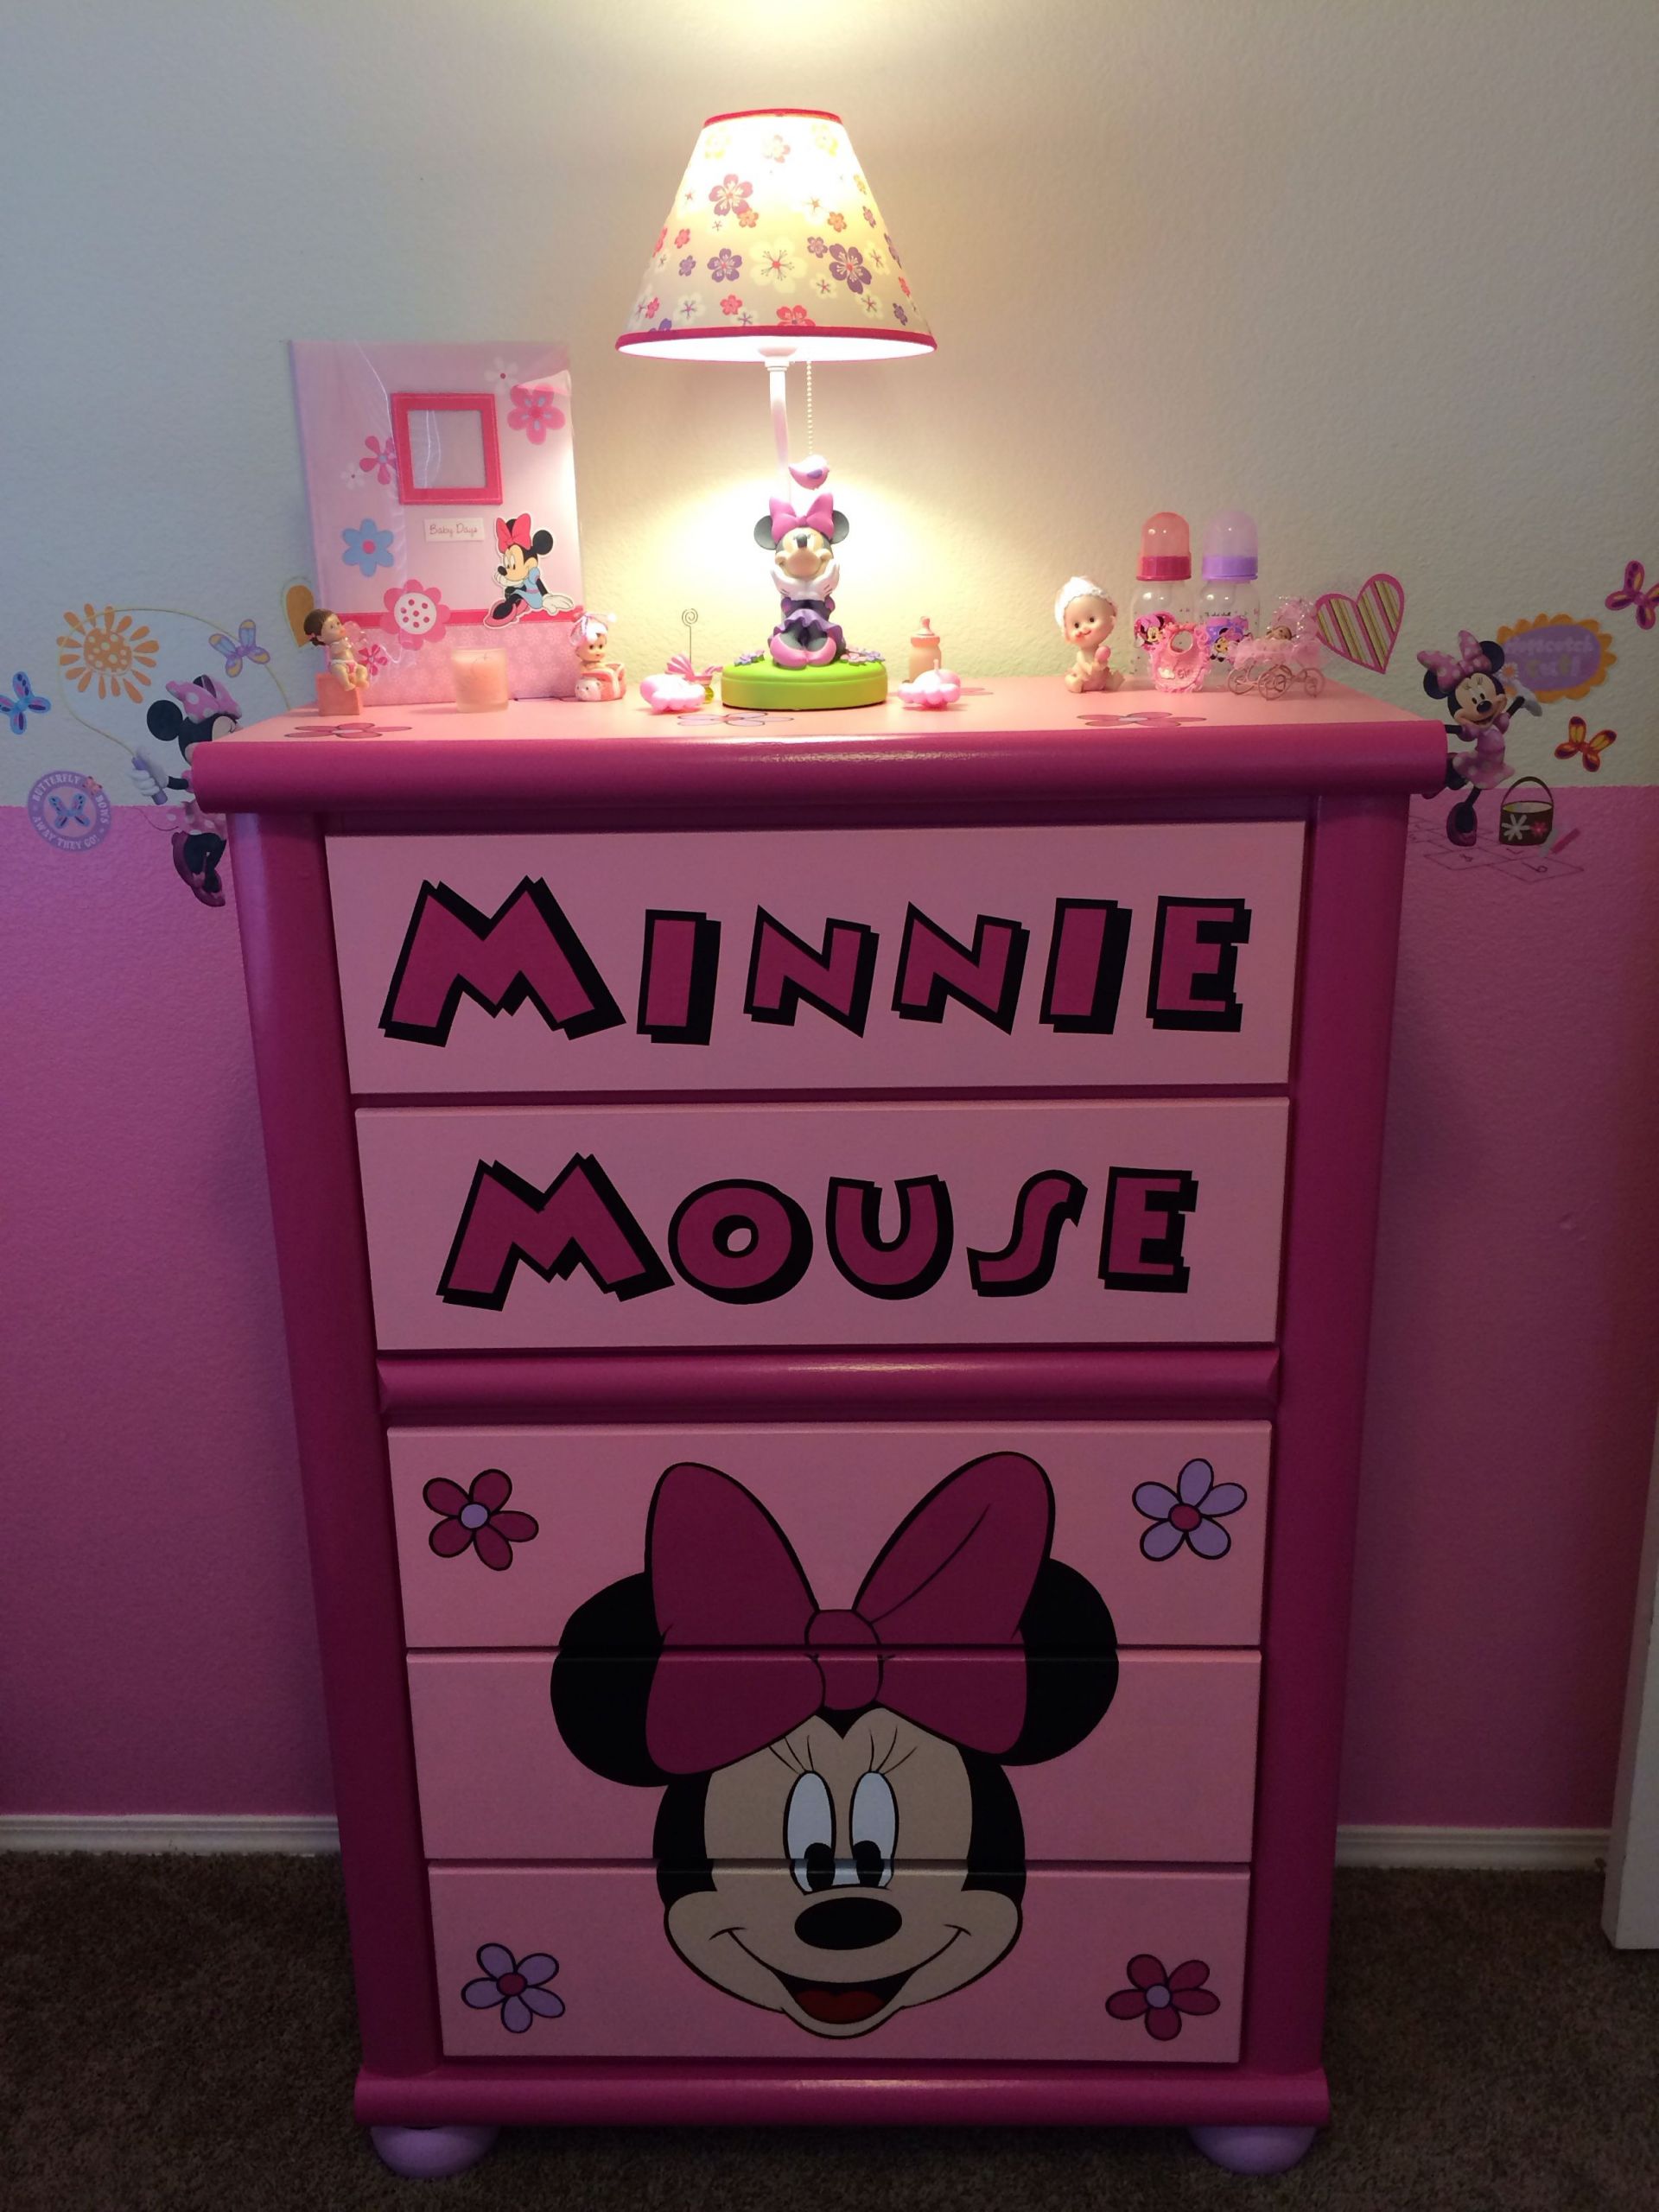 Minnie Mouse Baby Room Decor
 Custom Minnie Dresser & accessories